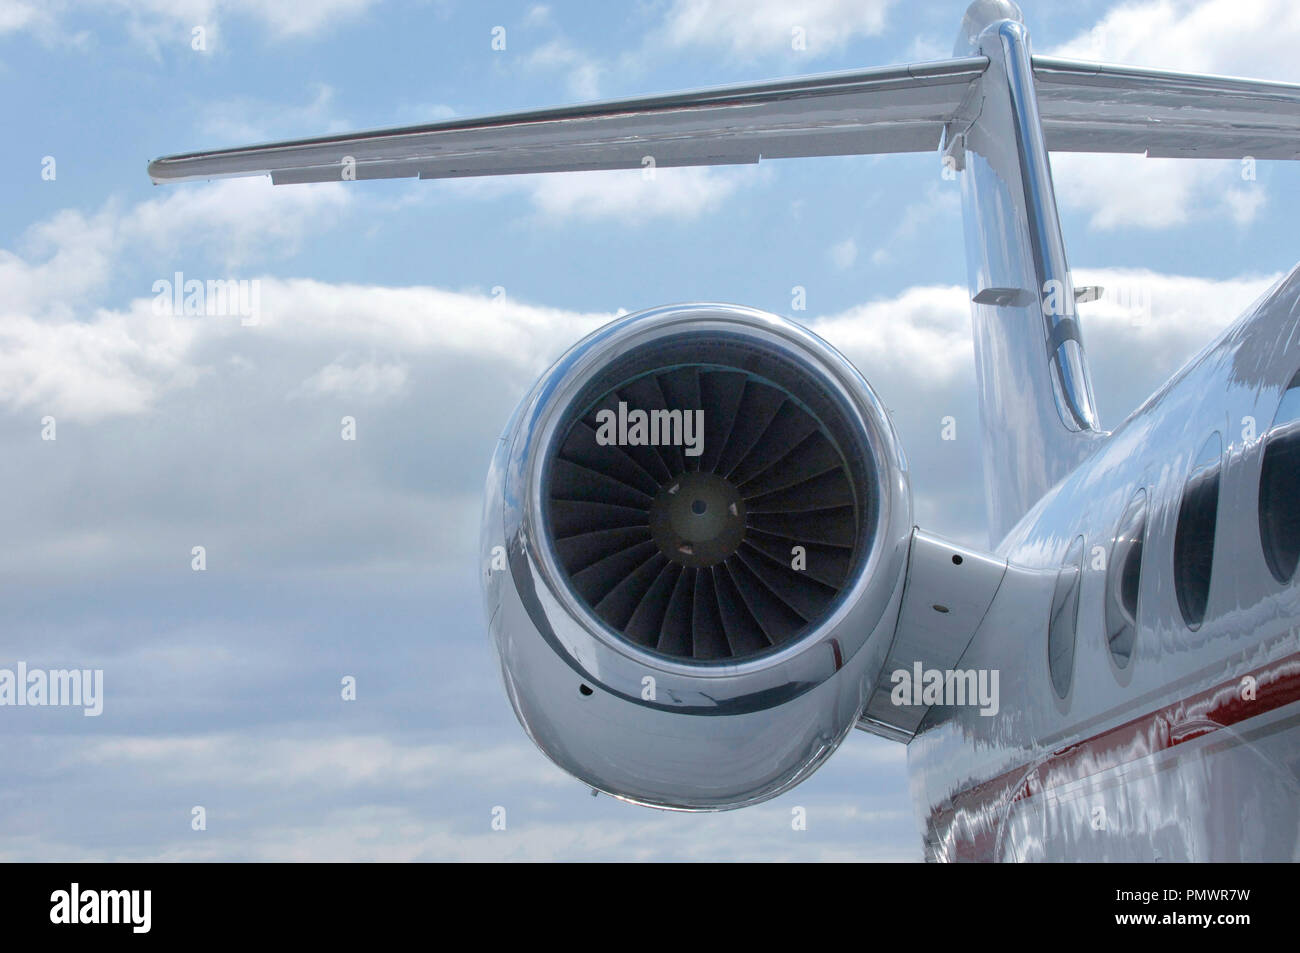 Switzerland: A B-787 privat jet engine at Zürich Airport Stock Photo